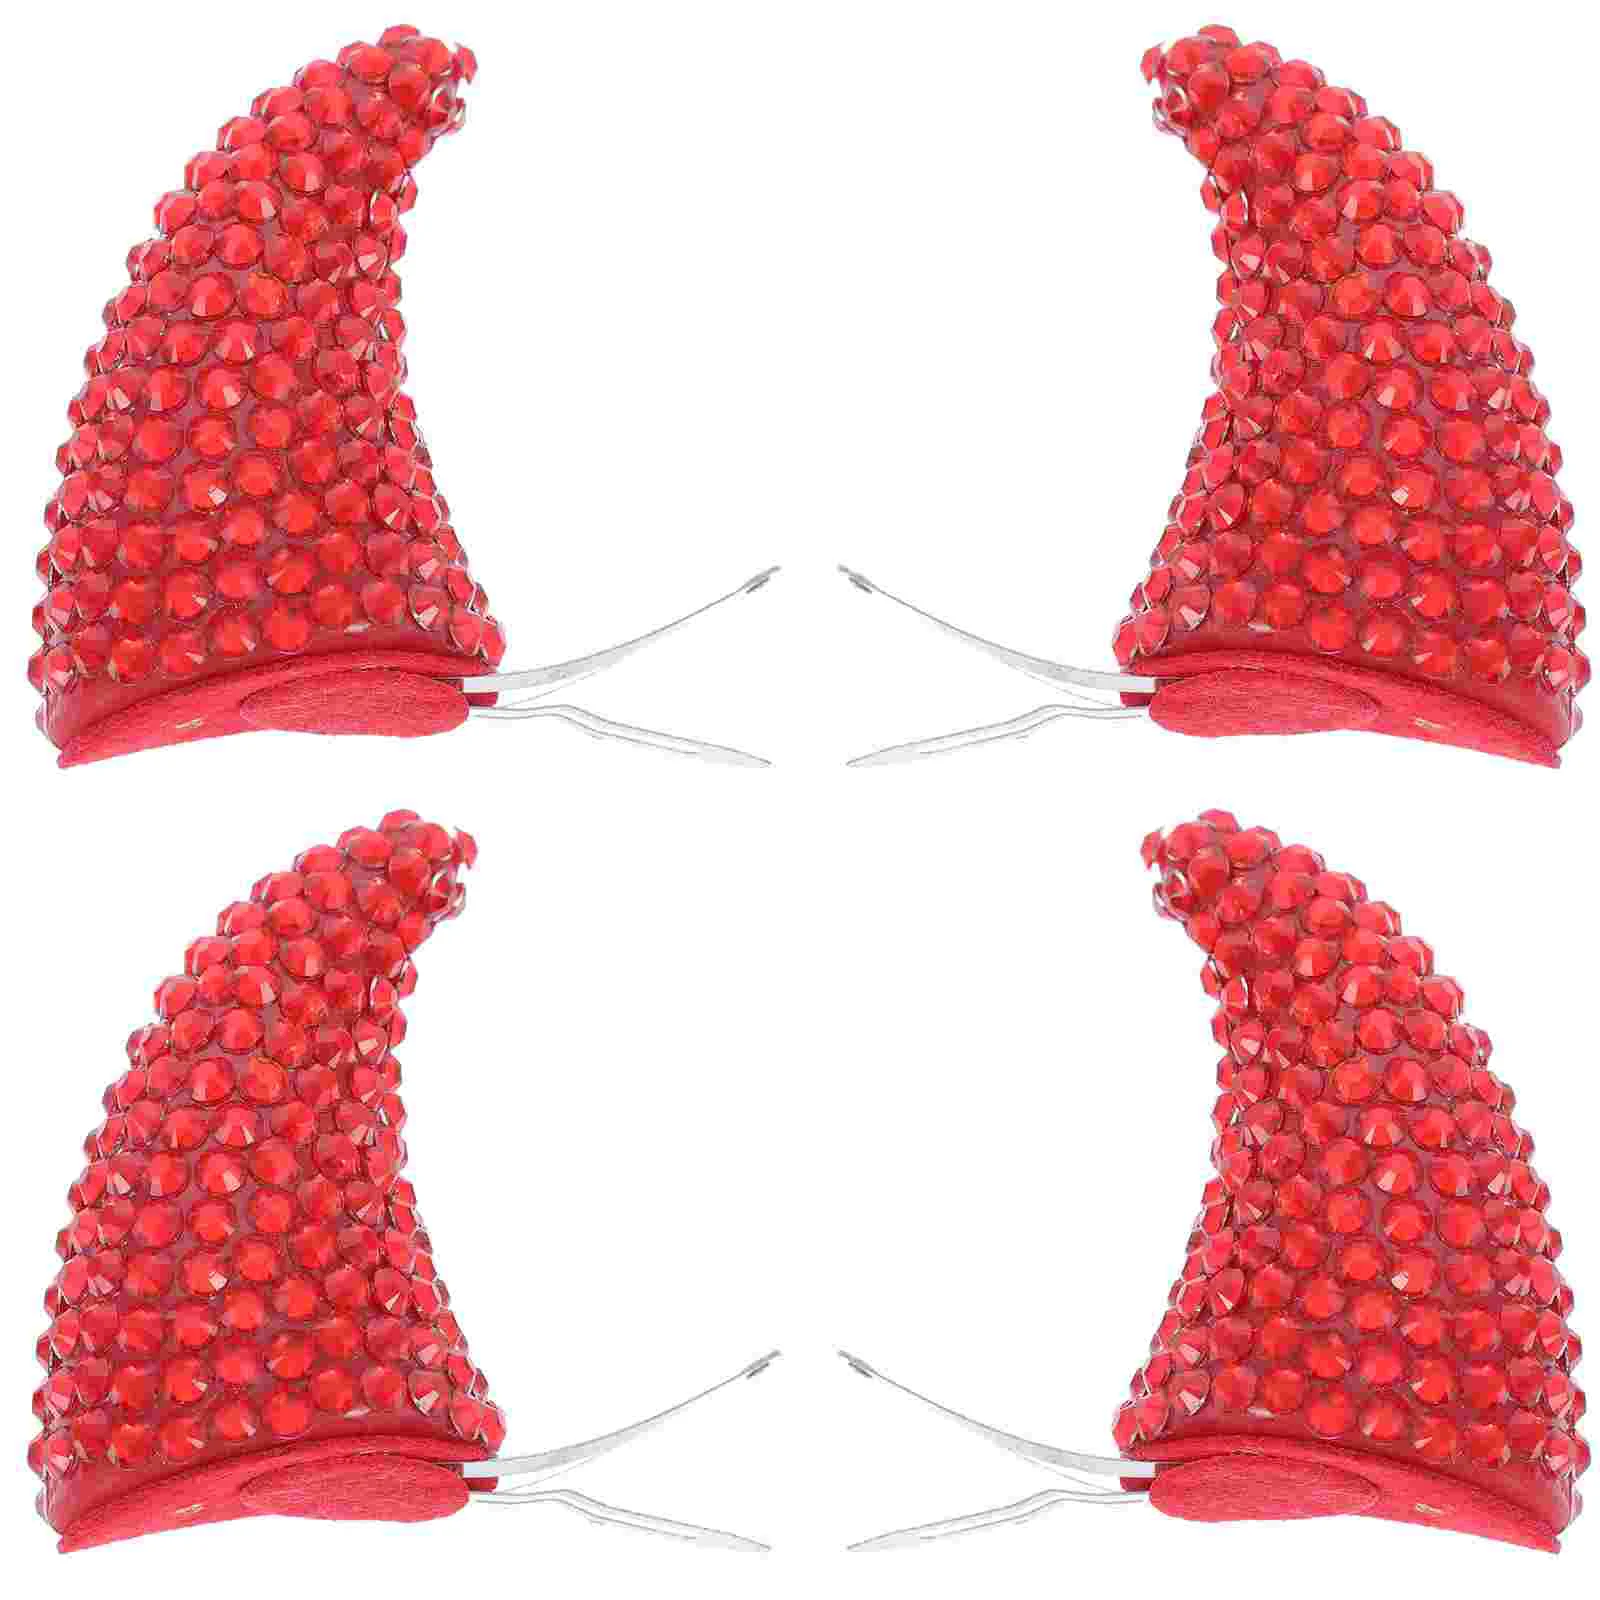 

4 Pcs Makeup Headband Halloween Hair Clips Ox Horn Headpin Accessories Red Hairpin Bull